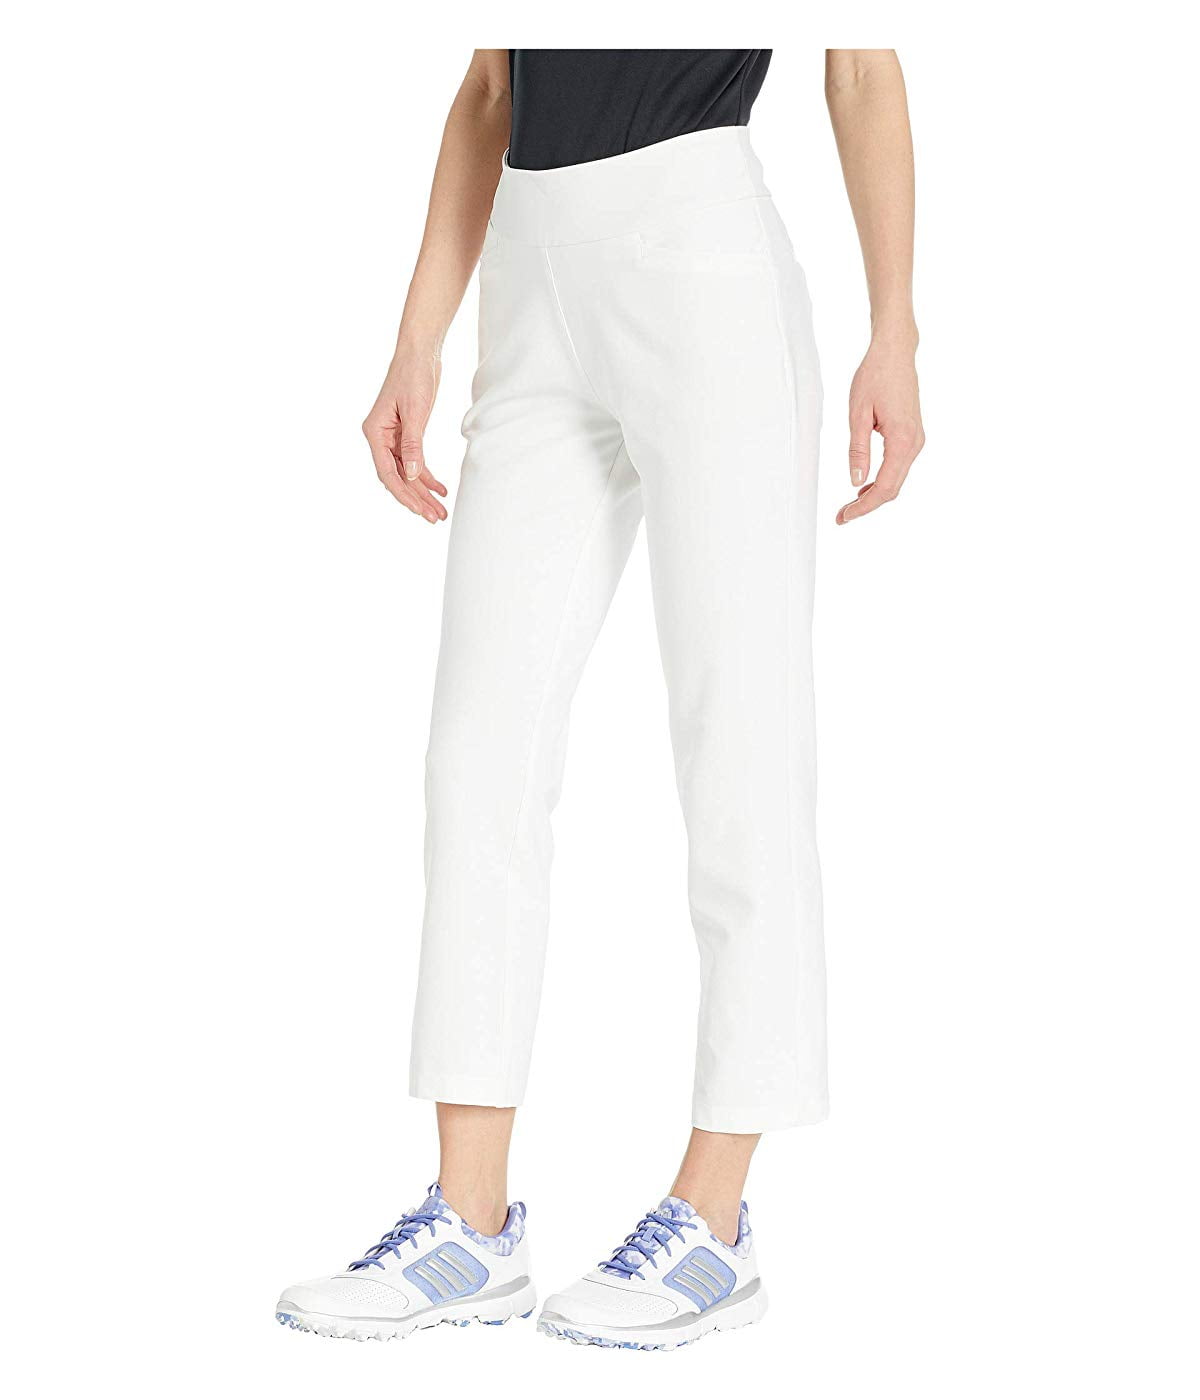 adidas Ultimate365 Adistar Cropped Pants White - Walmart.com